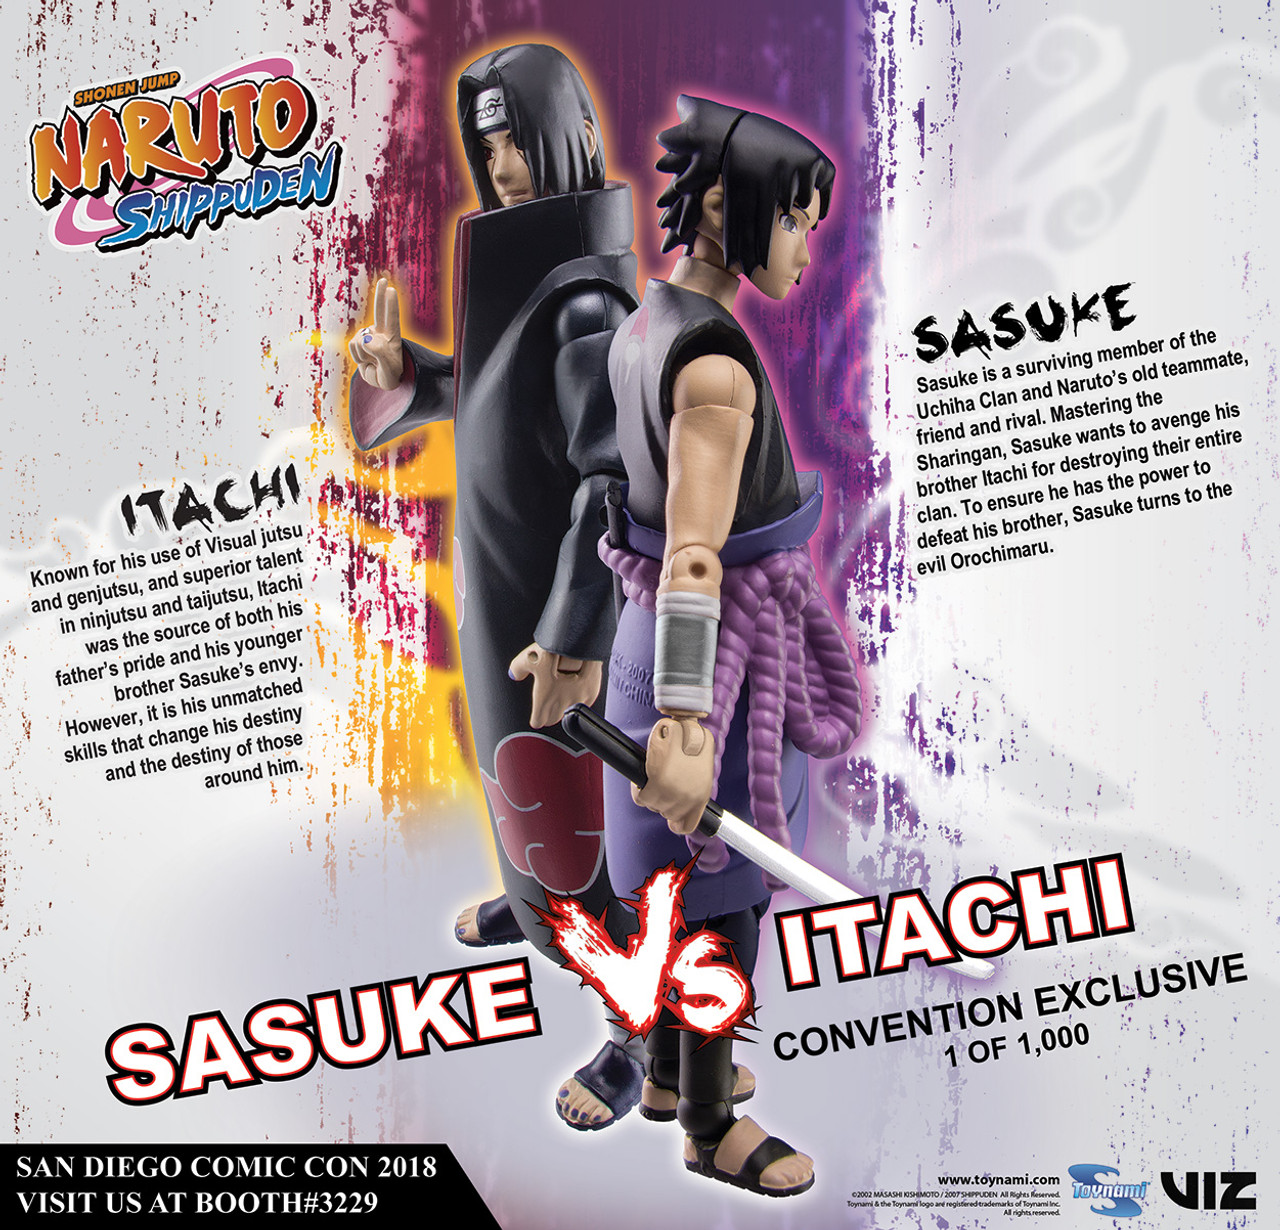 Naruto Anime Figure Shippuden Model Uchiha Itachi Sasuke Pai - Inspire  Uplift